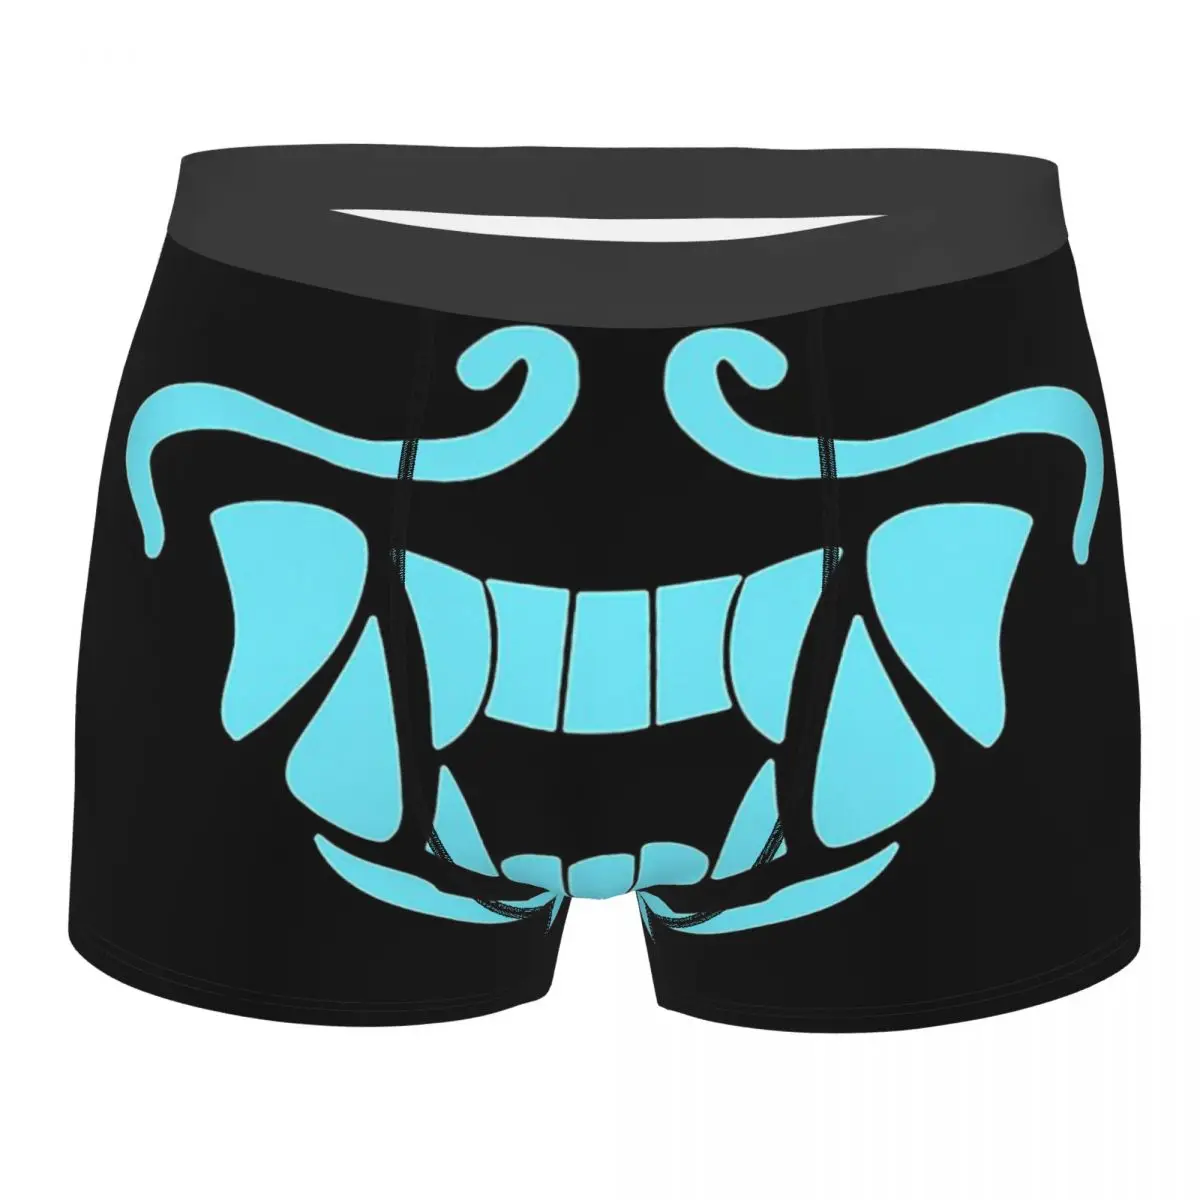 

K DA Akali League of Legends Multiplayer Online Battle Arena Game Underpants Homme Panties Male Underwear Sexy Short Boxer Brief